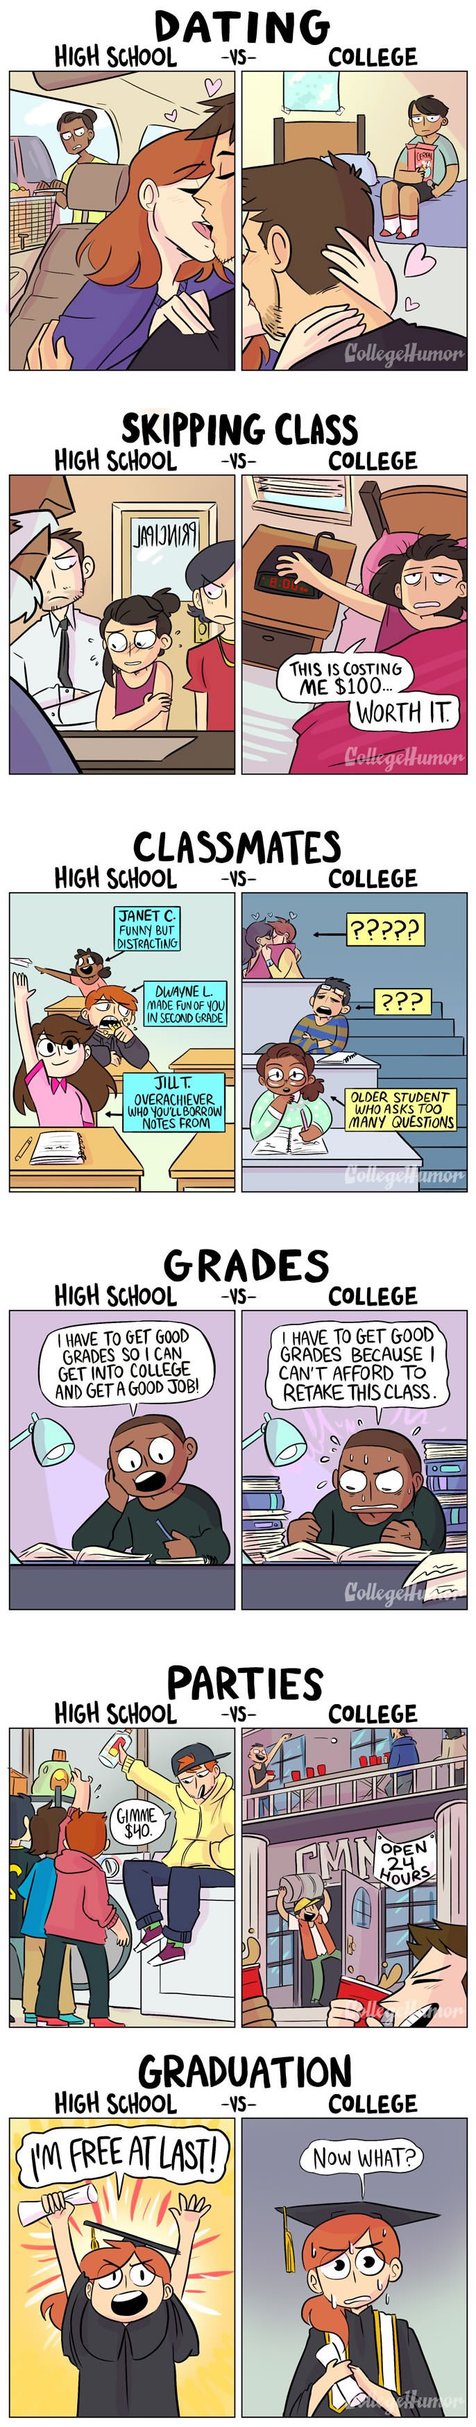 Meme Ilustrasi Perbandingan Zaman Sekolah & Kuliah, Bener 